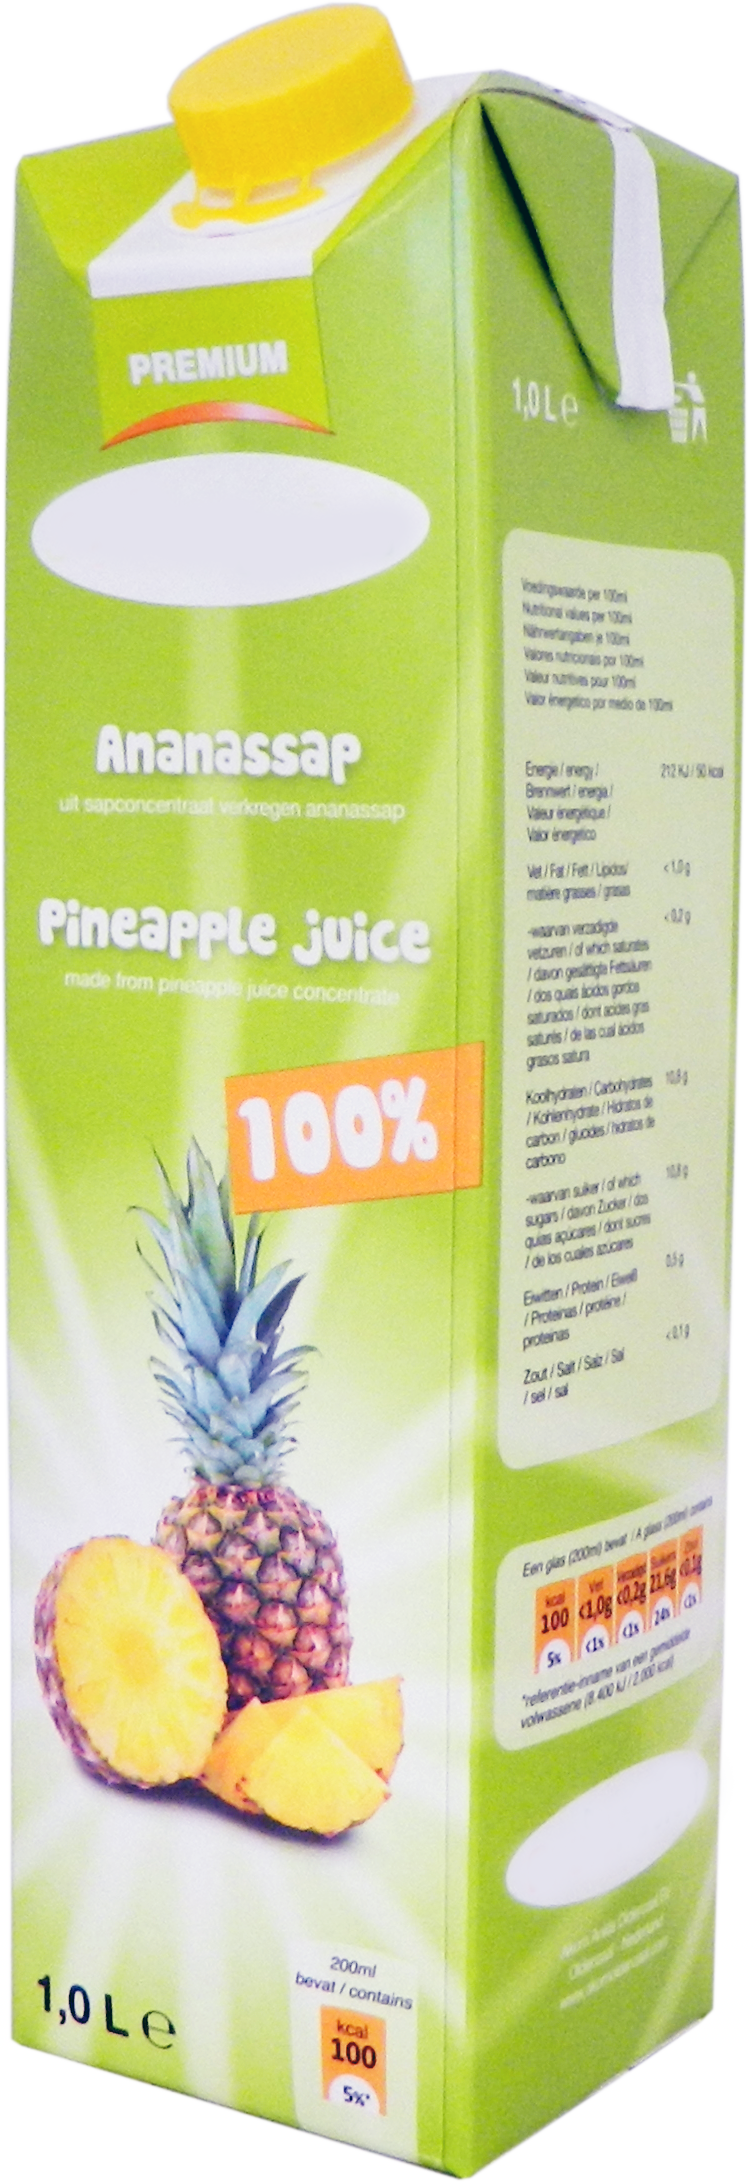 Premium Pineapple juice 1,0 liter